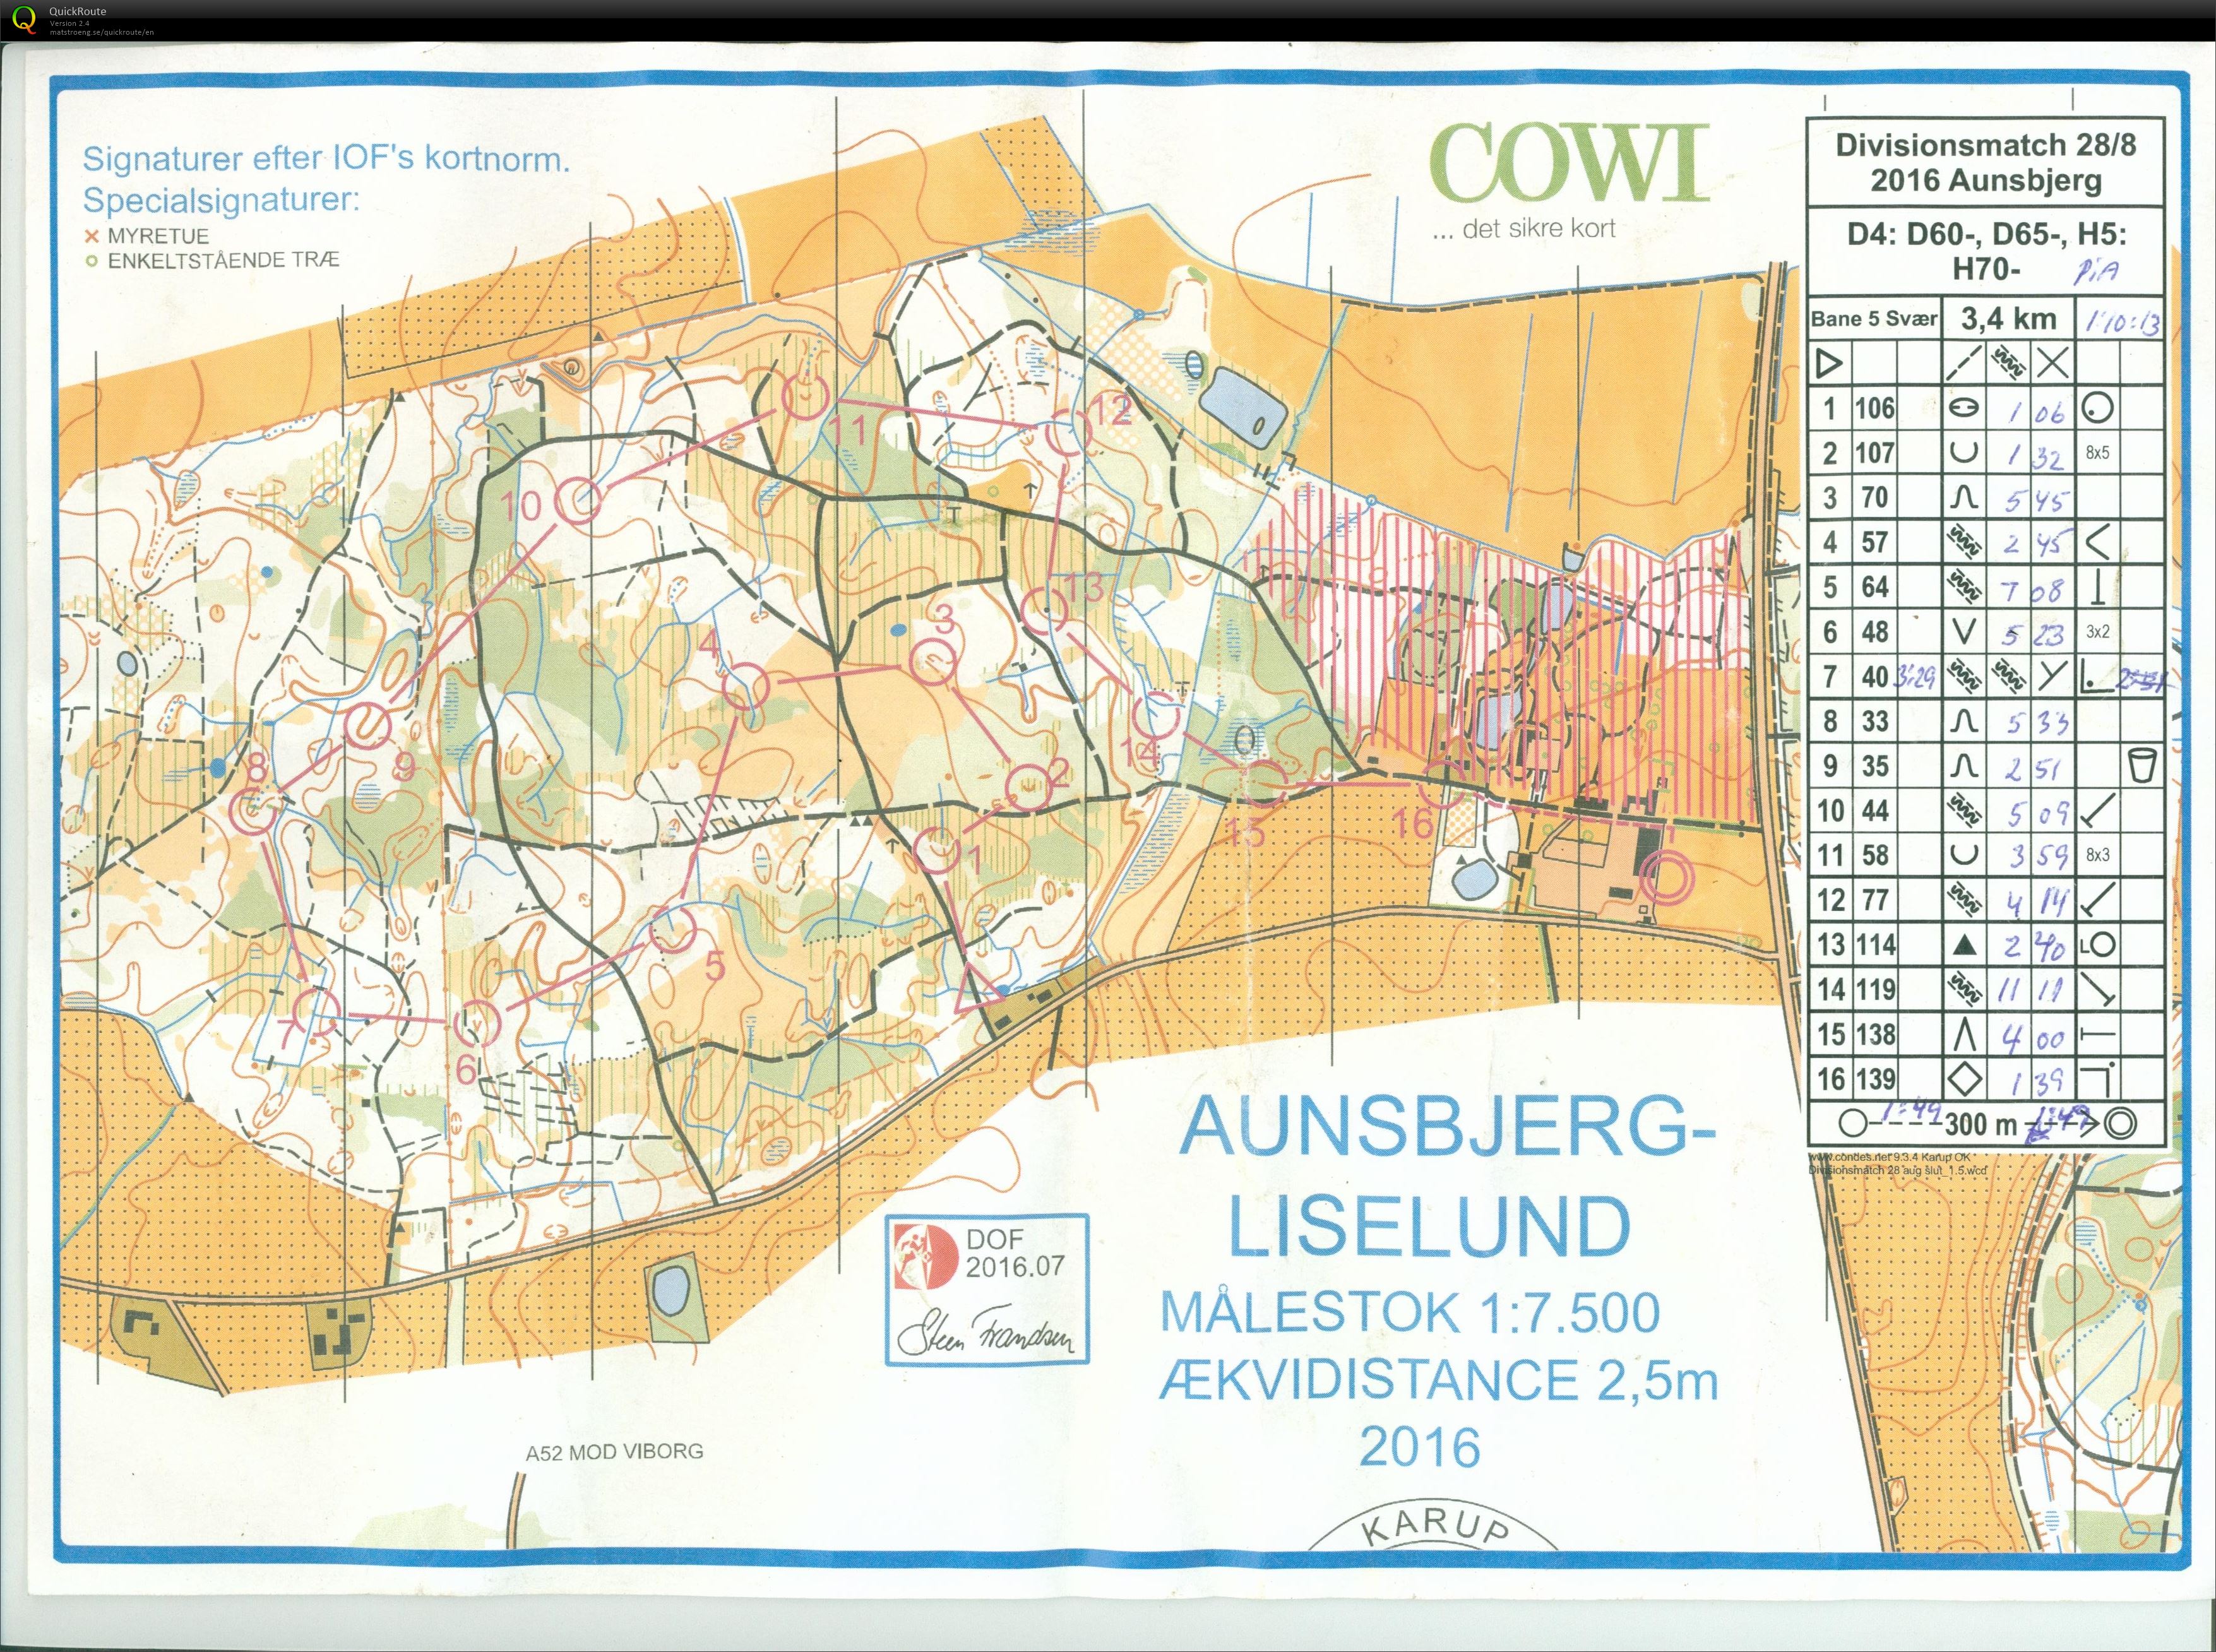 Aunsbjerg Liselund, D4, D60, Bane 5, Pia Gade, 28081 (28.08.2016)